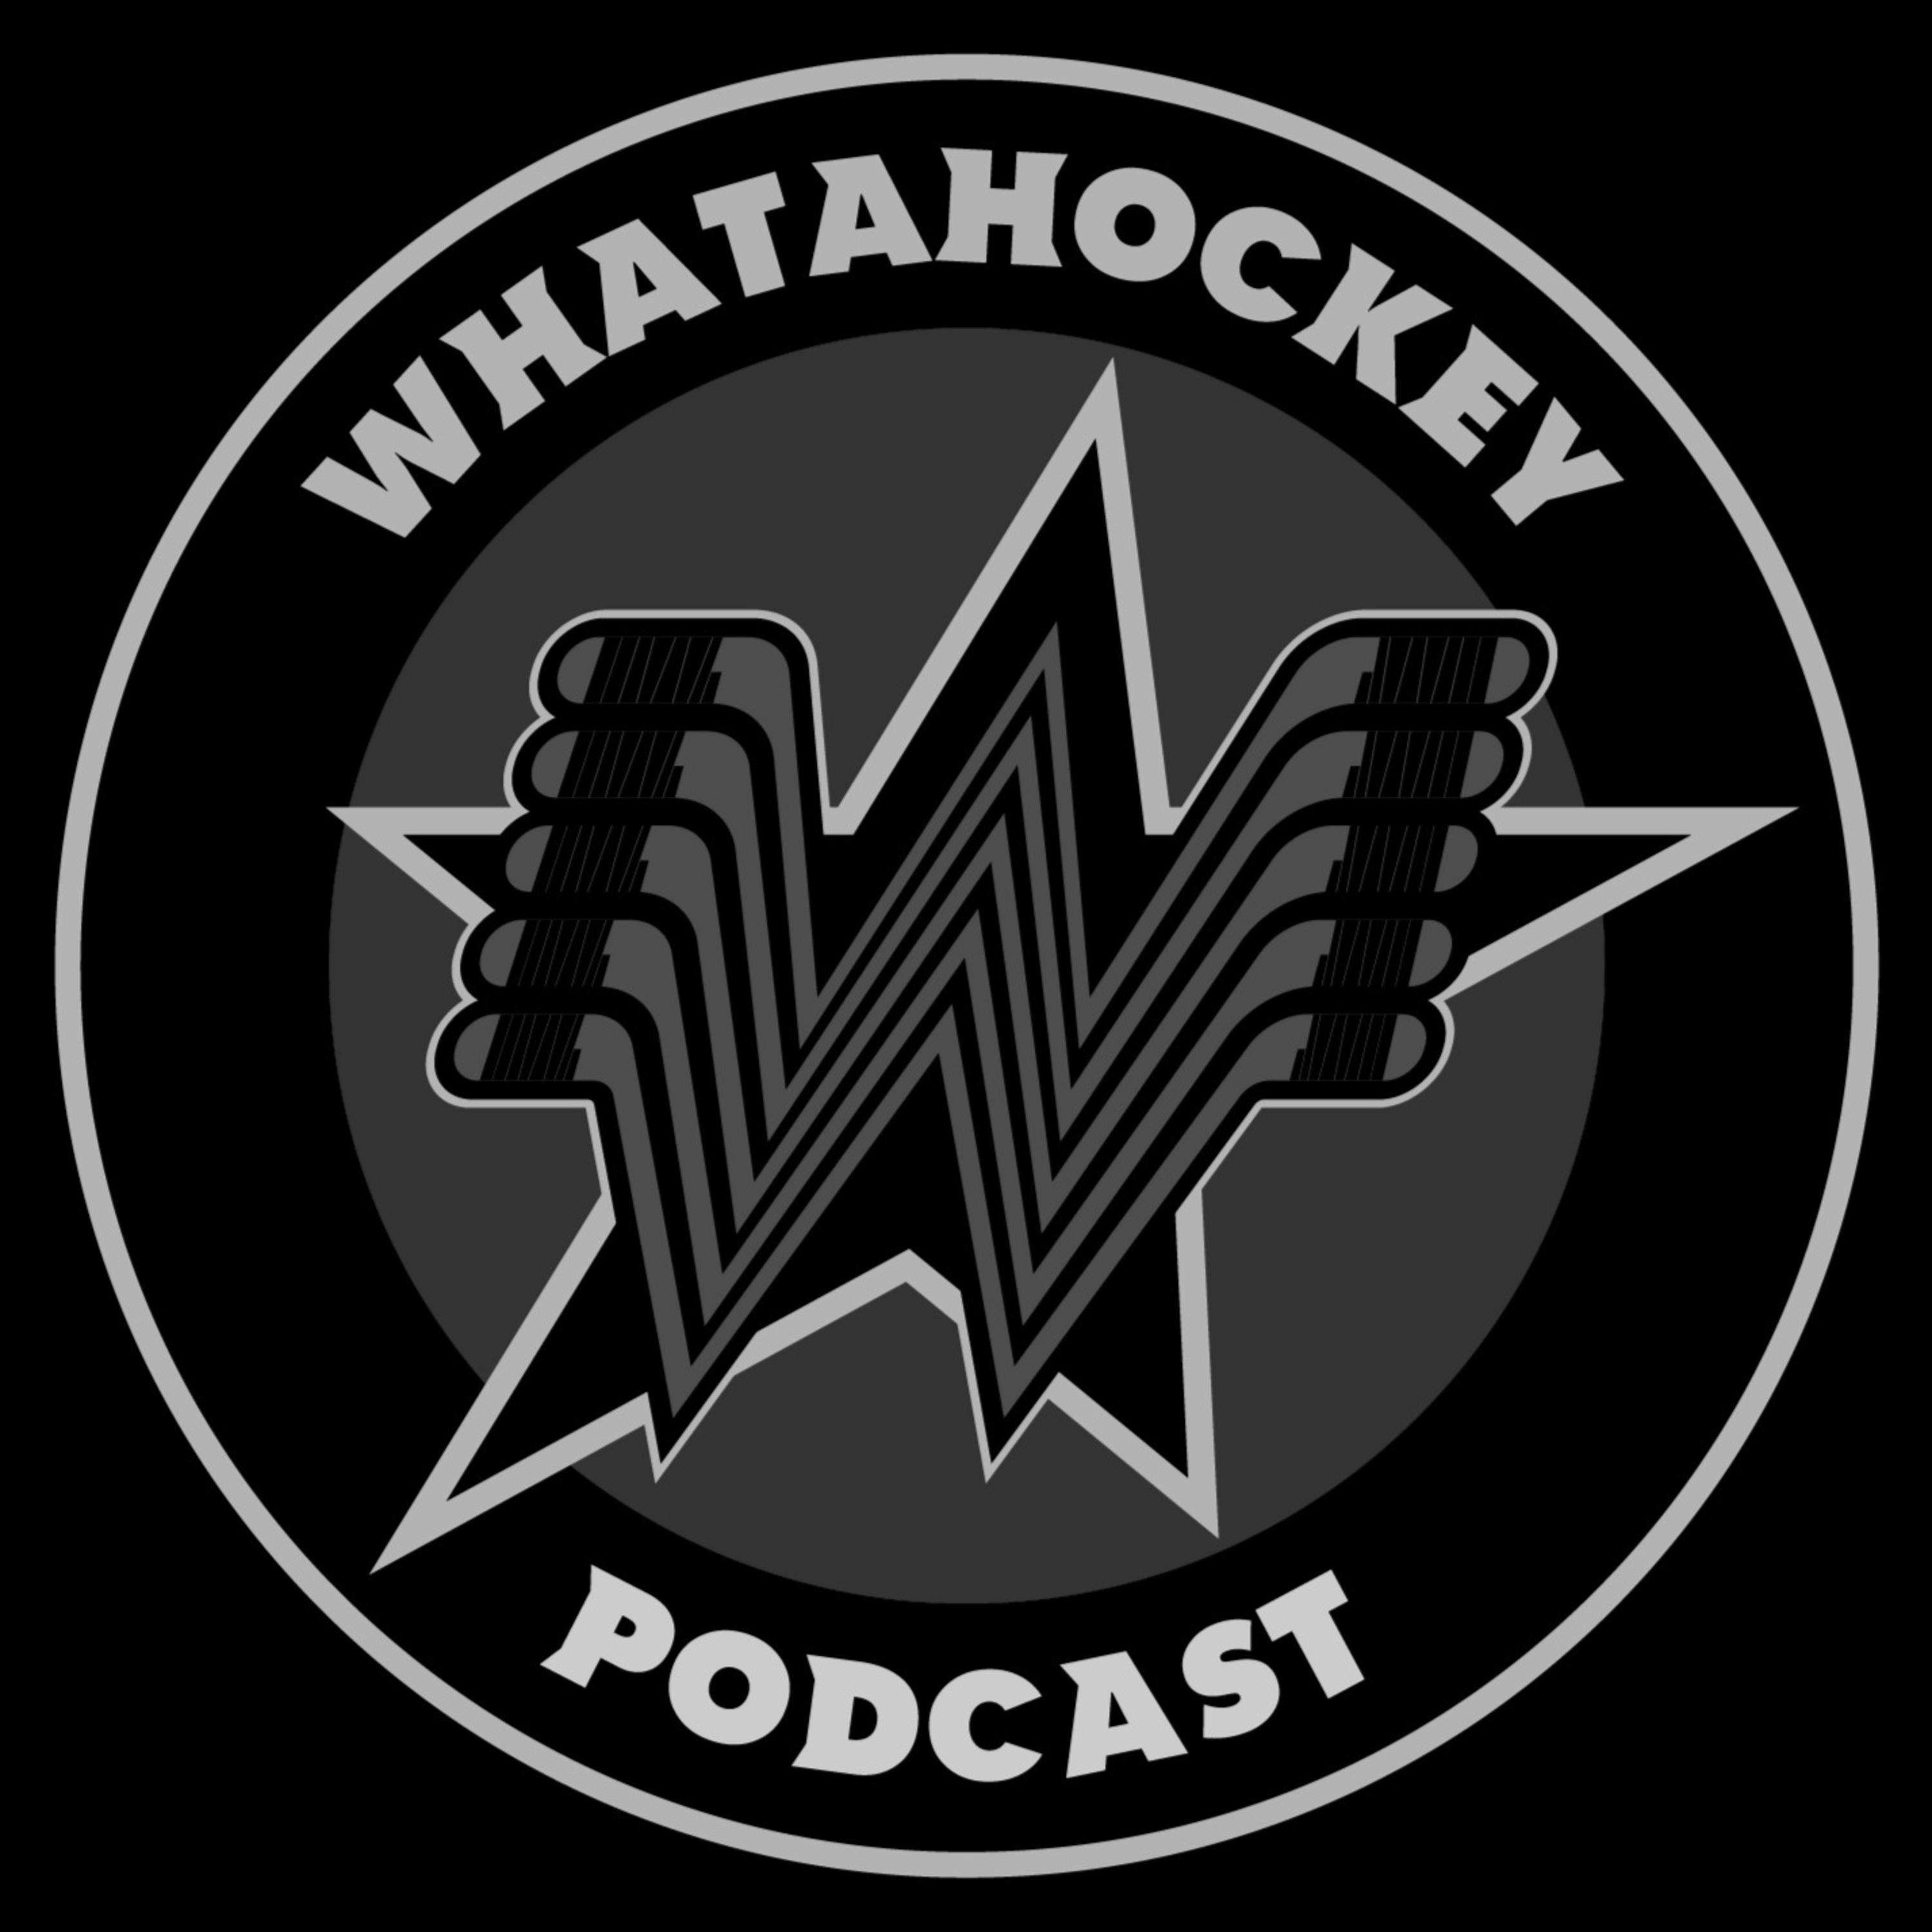 Whatahockey Podcast: Episode 126-